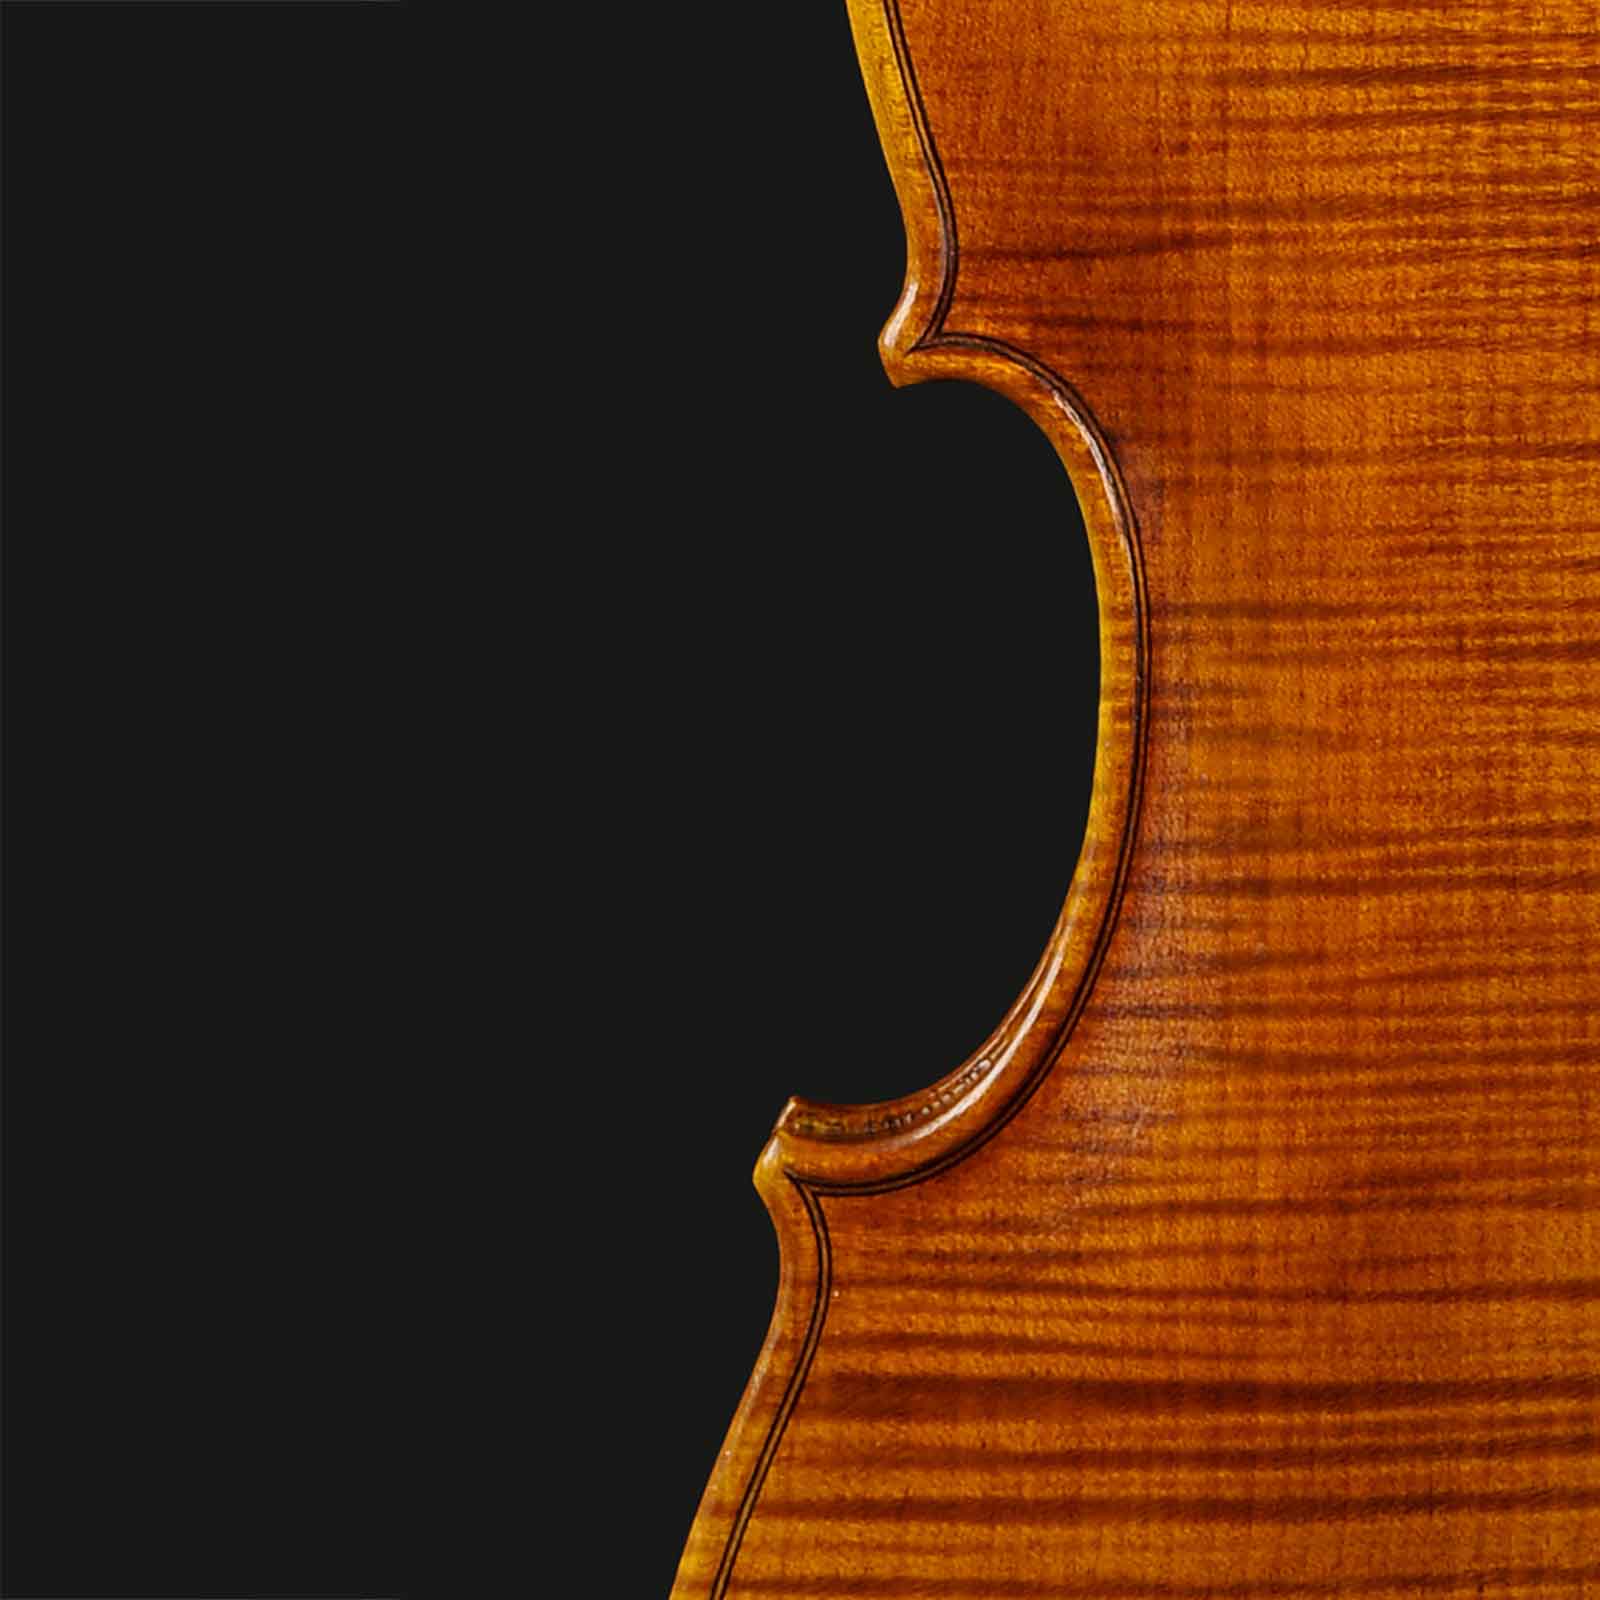 Antonio Stradivari Cremona 1715 “San Pietro“ - Image 4